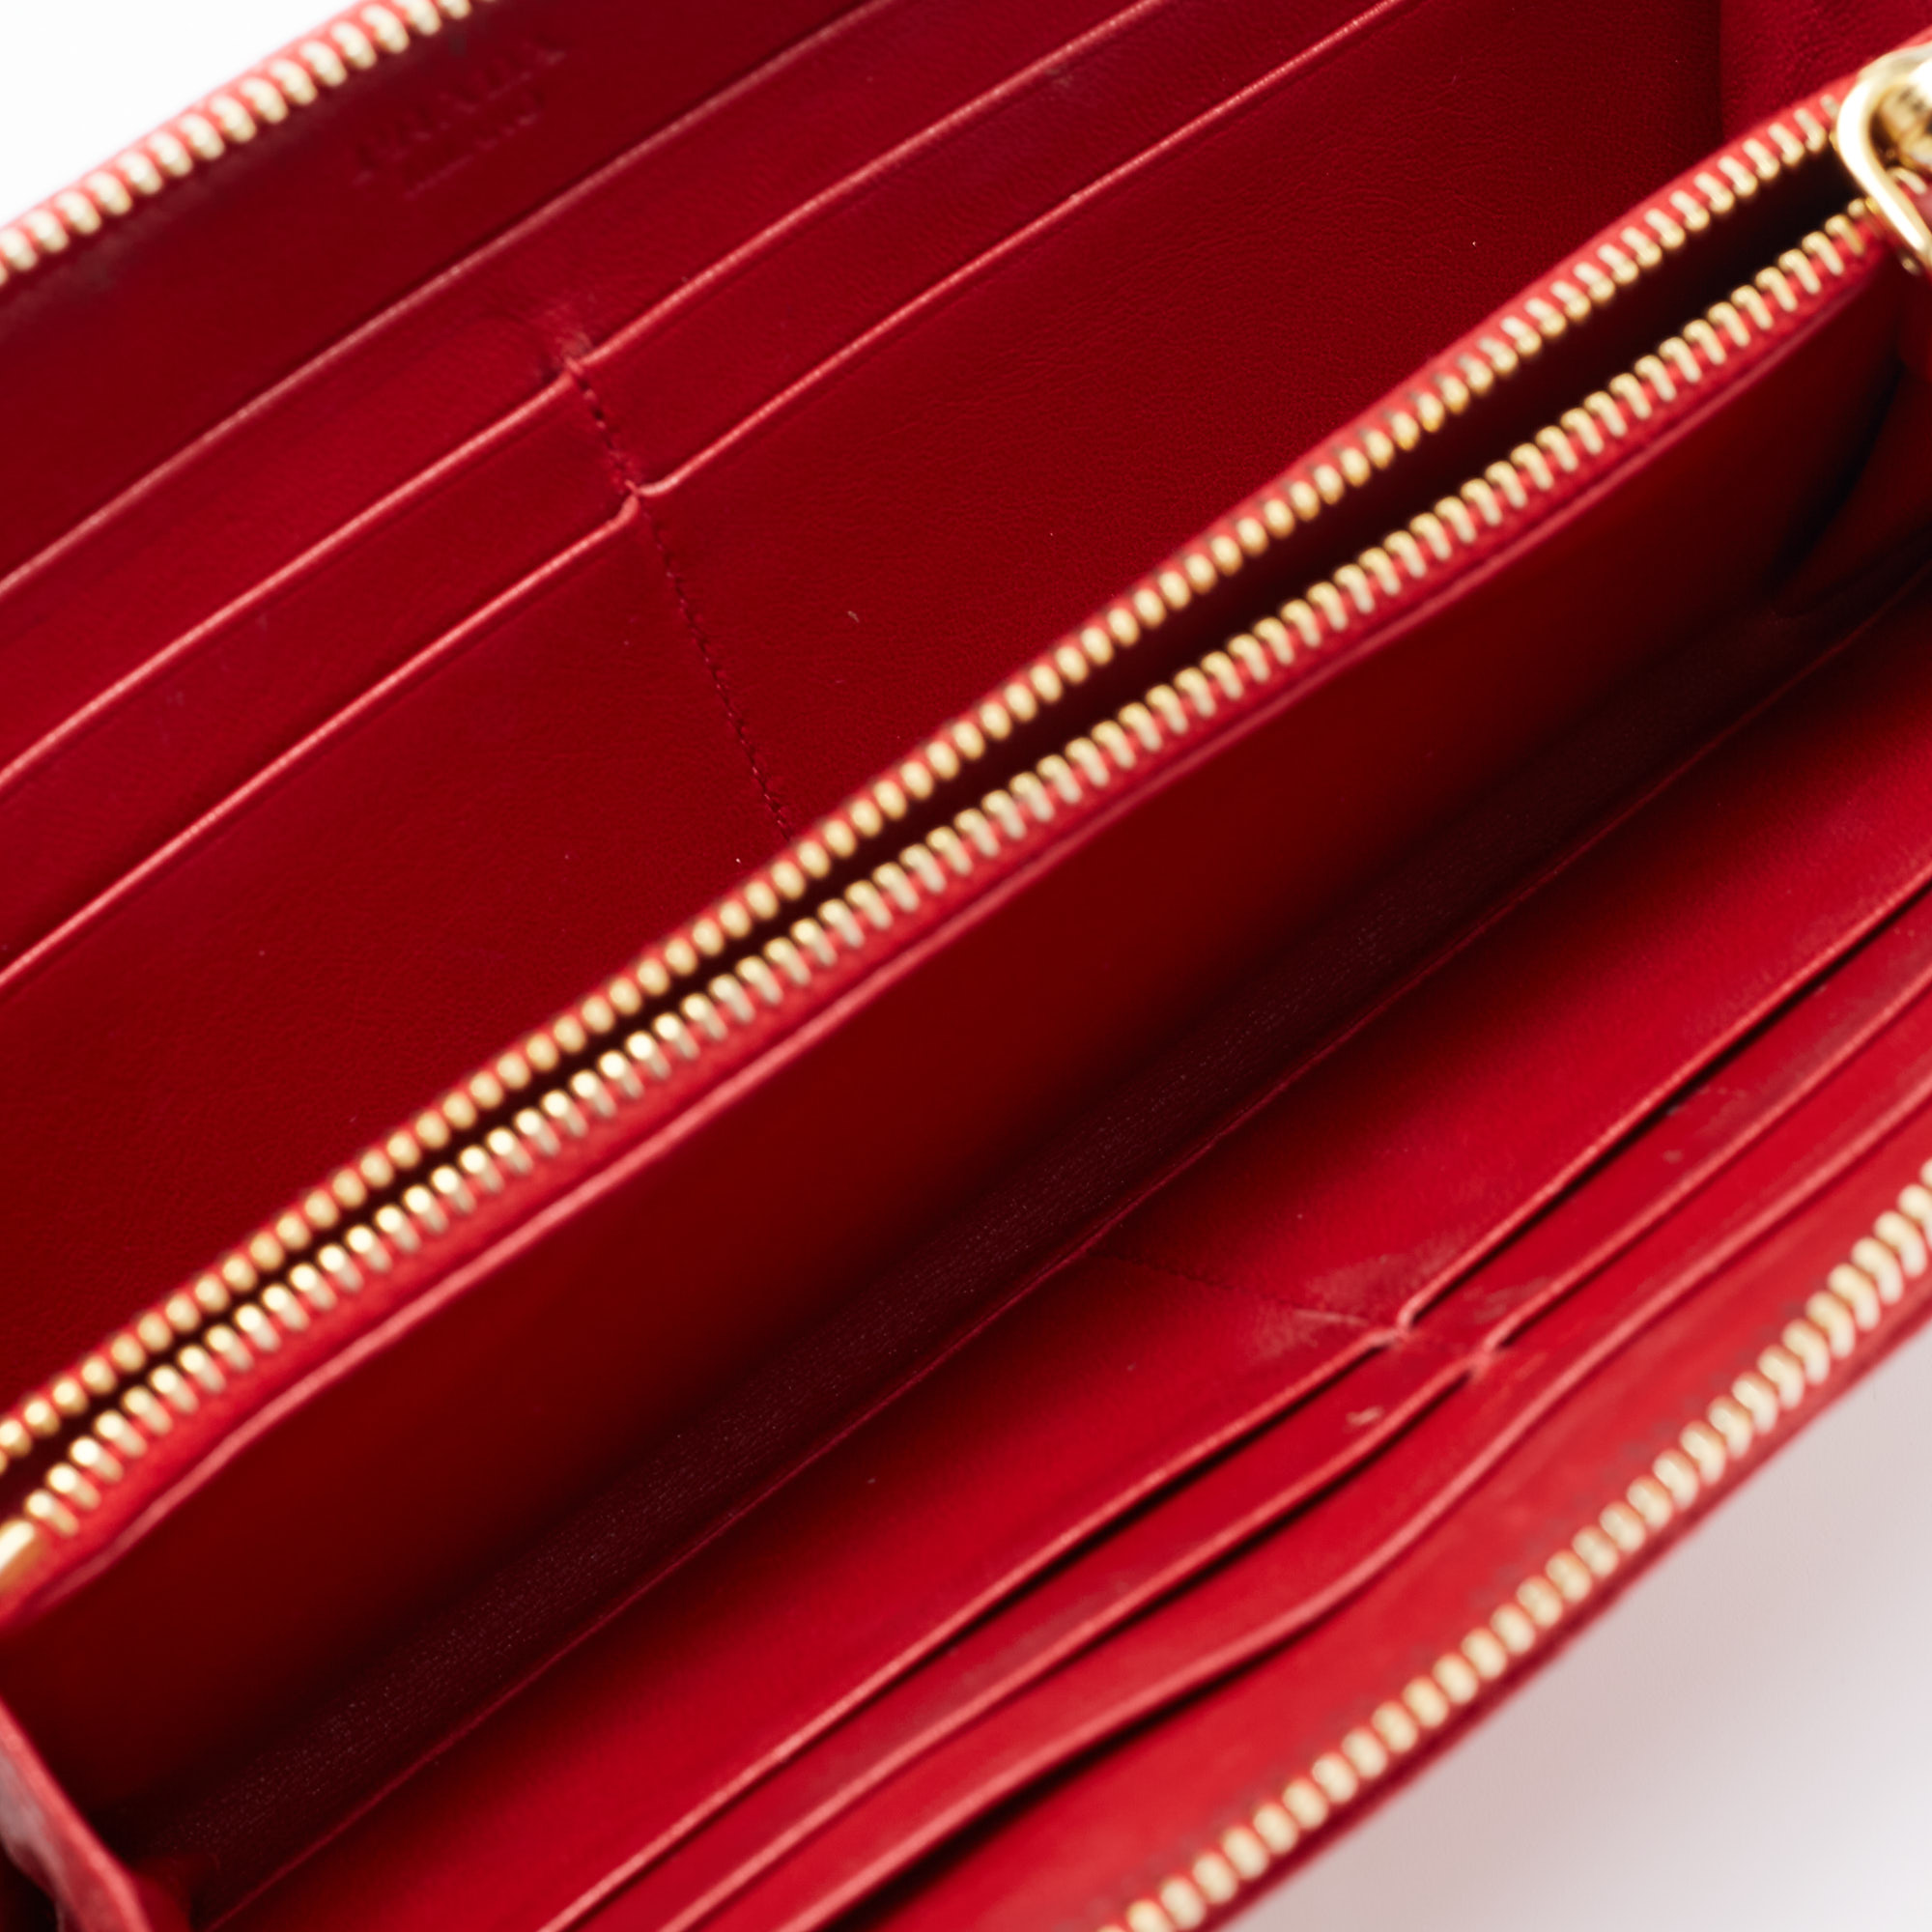 

Prada Red Saffiano Patent Leather Zip Around Wallet